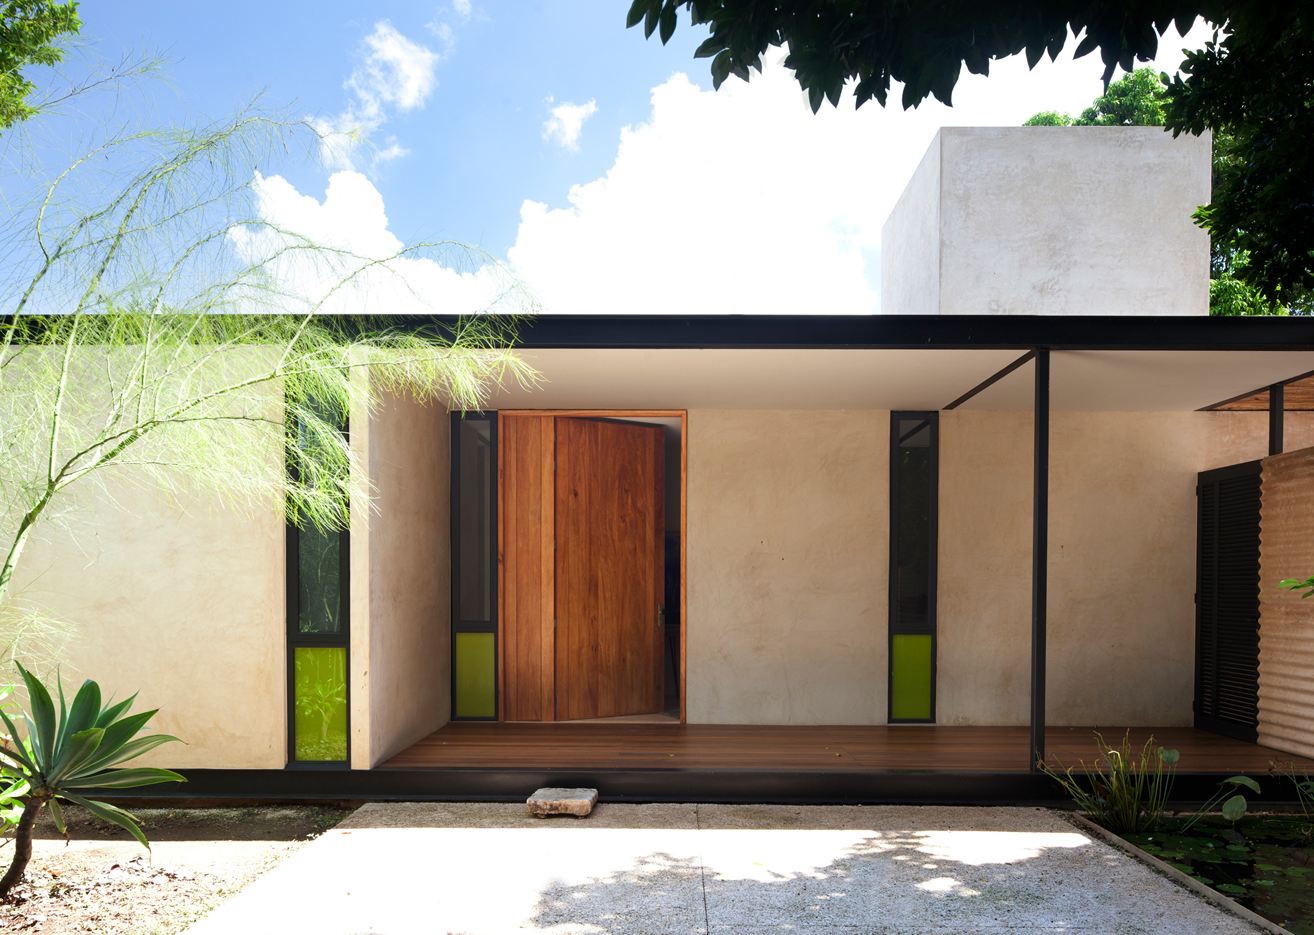 Itzimna House in Mérida, Mexico by Reyes Rios + Larrain Arquitectos